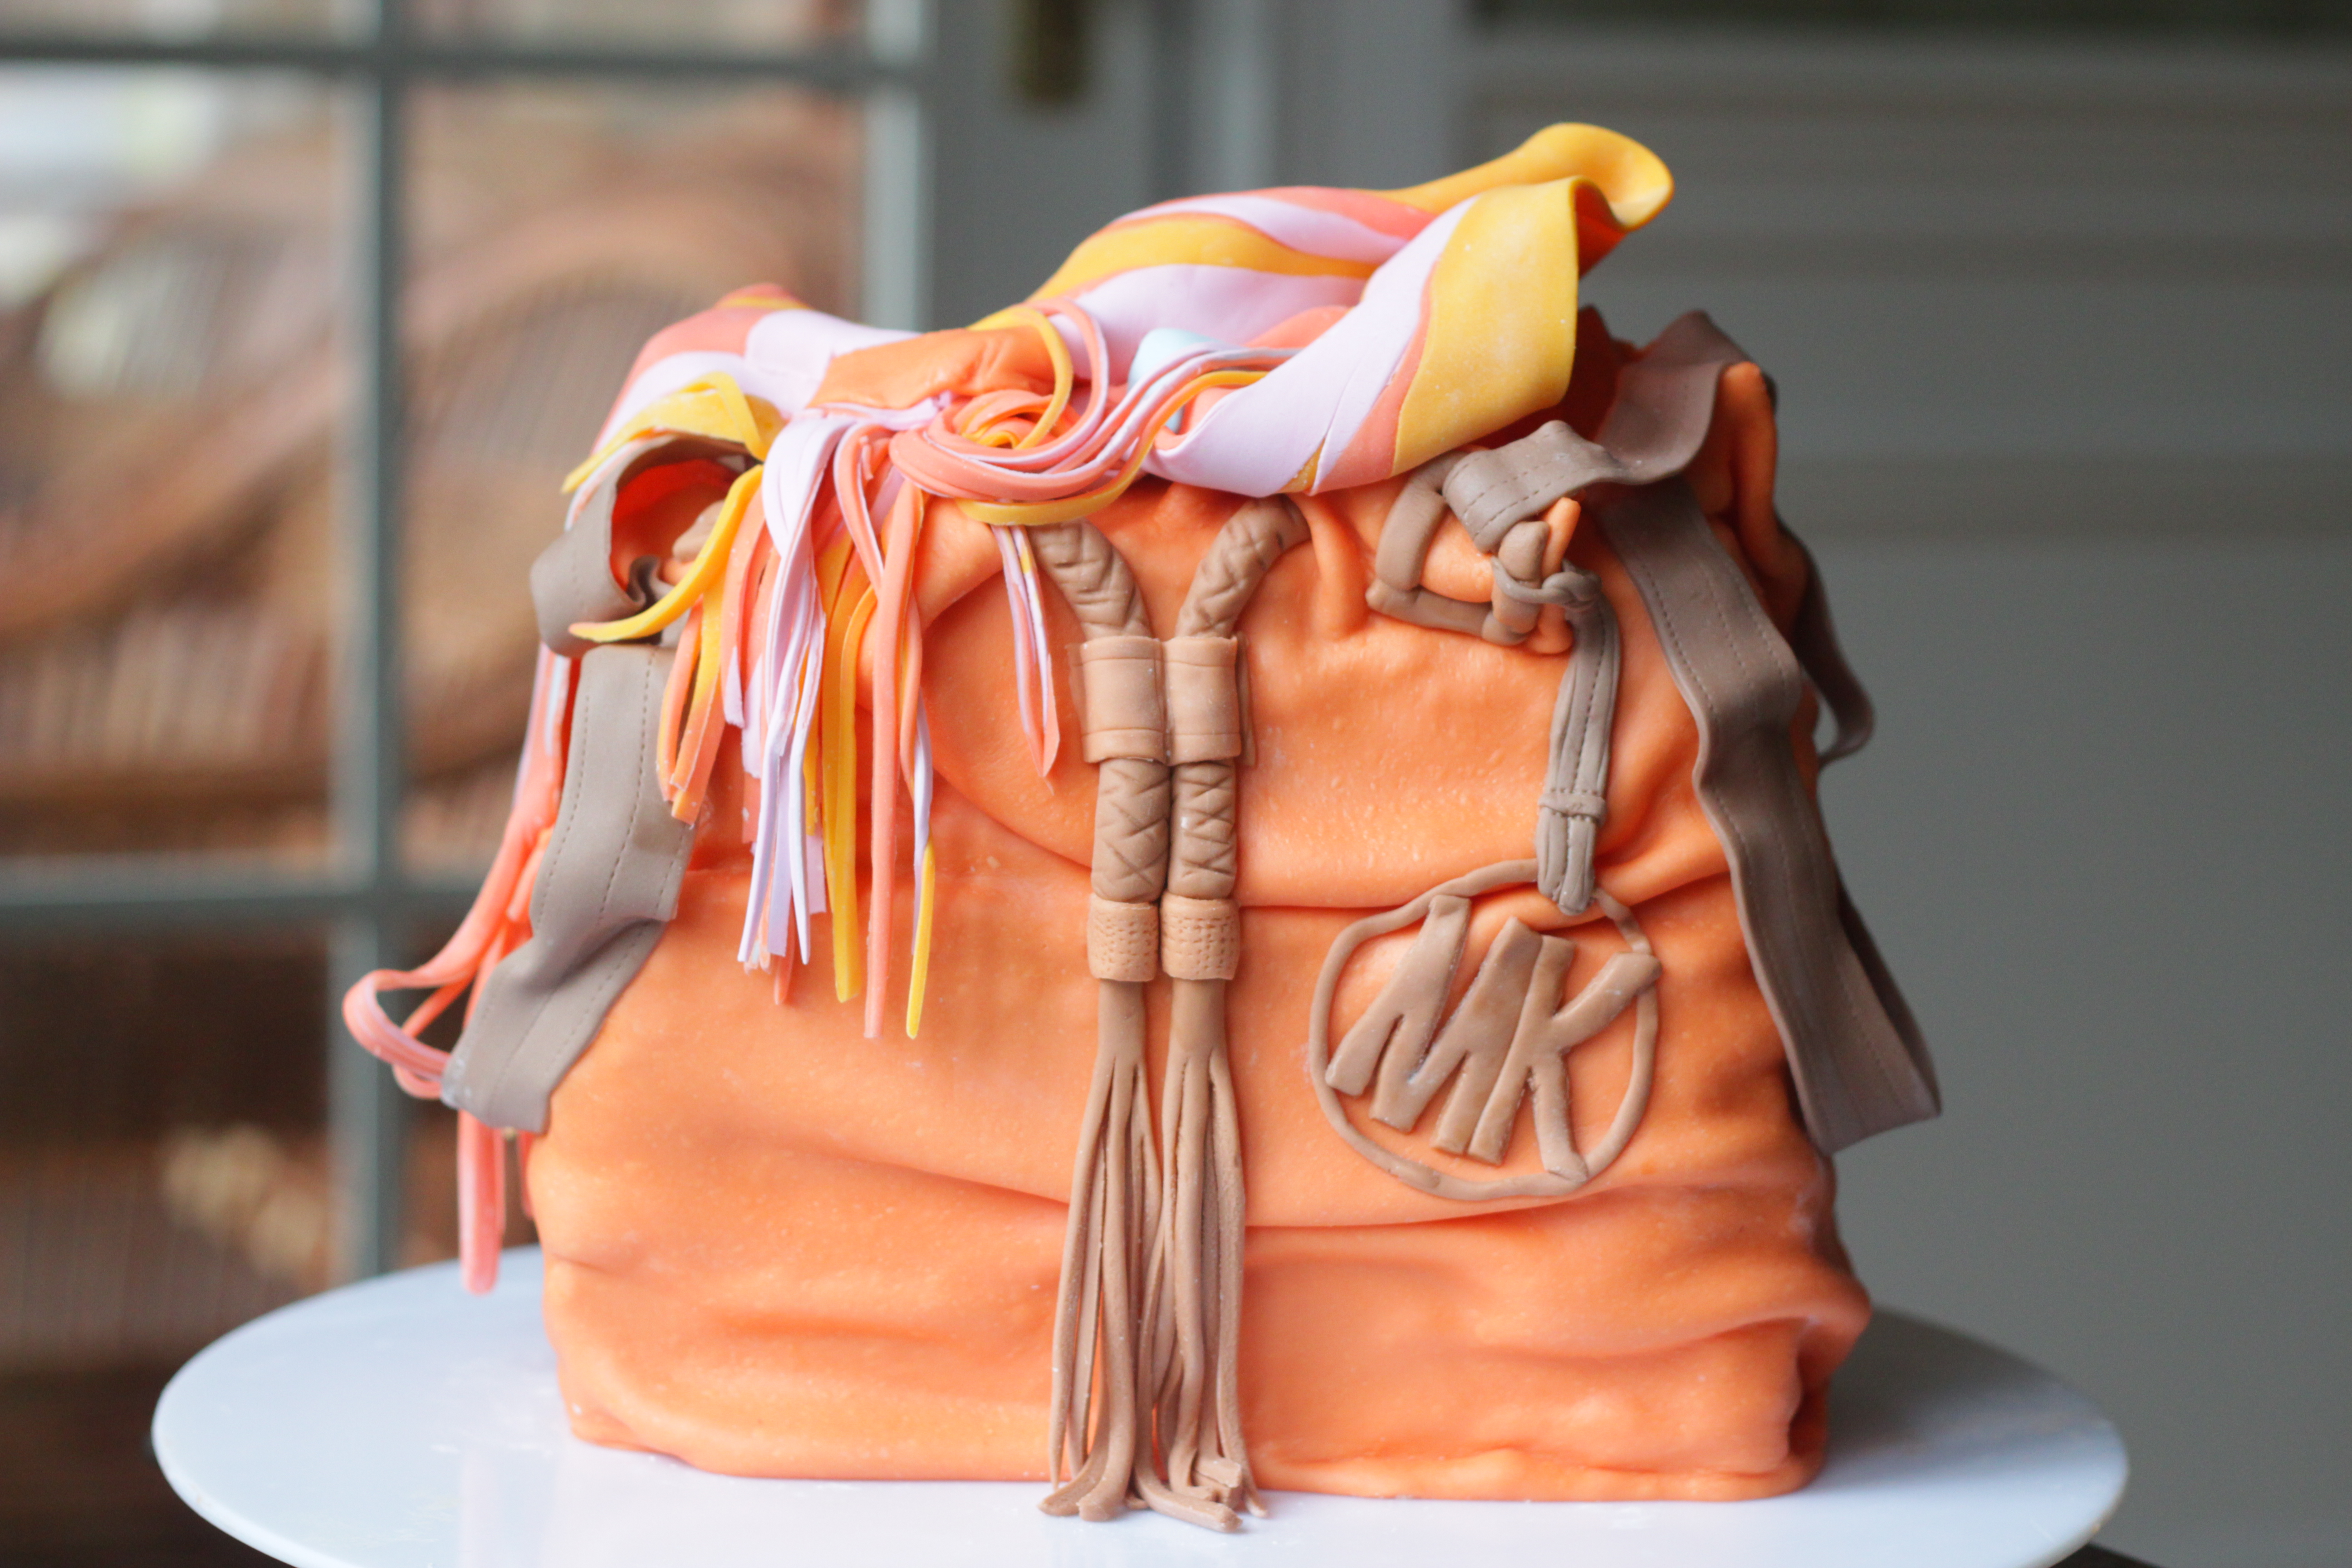 Designer Handbag Cake - Veena Azmanov